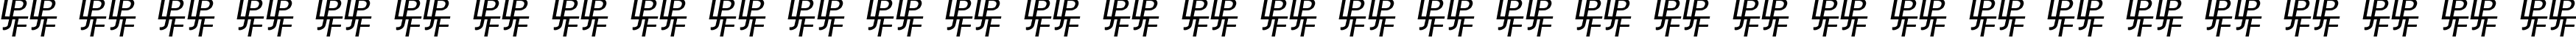 Пример написания русского алфавита шрифтом NewStyleSmallCaps Embossed